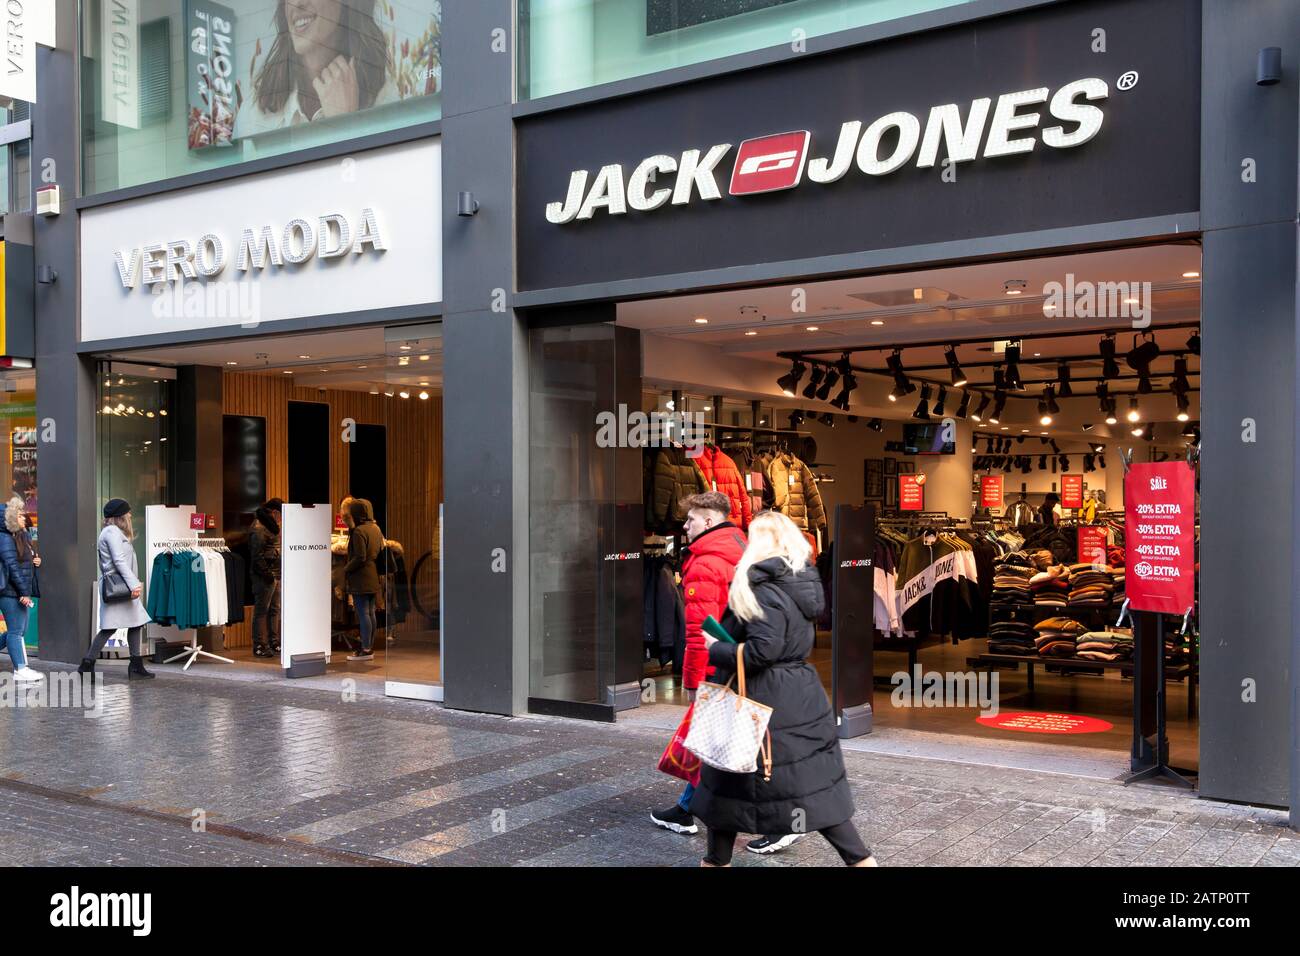 Vero Moda Jack Jones Store High Resolution Stock Photography and Images -  Alamy